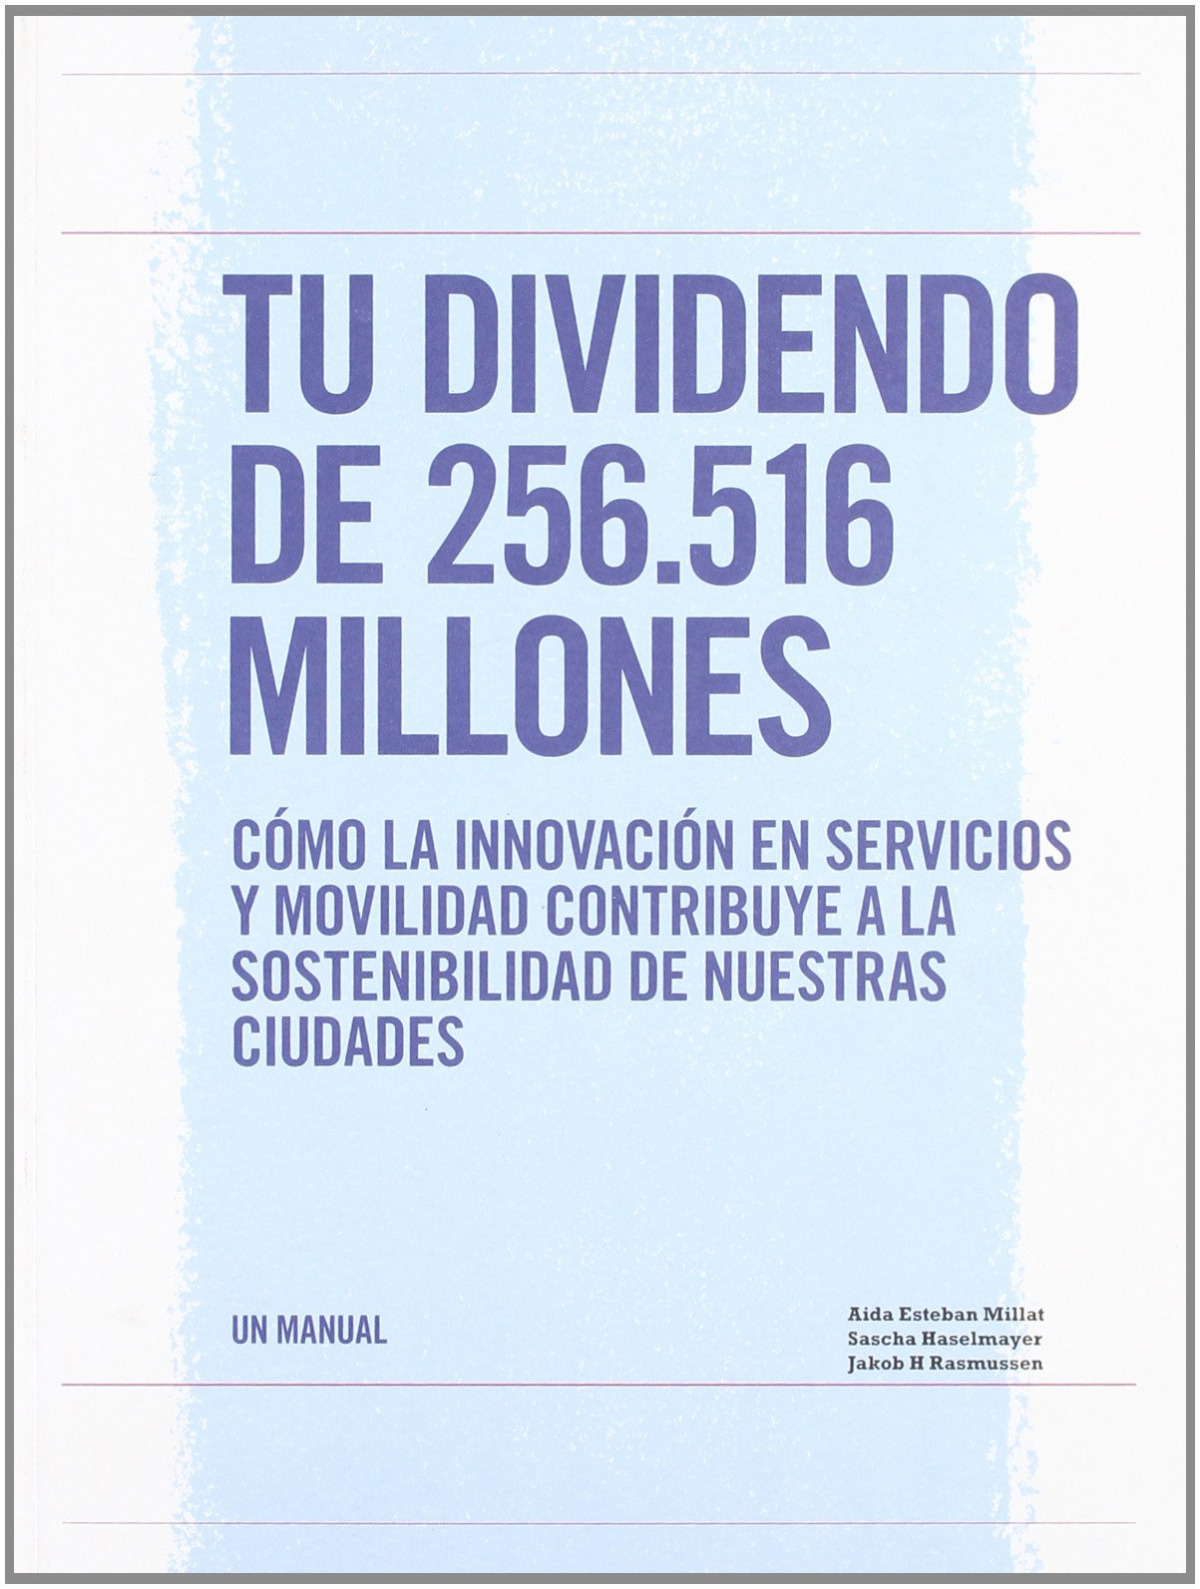 Tu dividendo de 256.516 millones - Esteban Millat, Aida / Haselmayer, Sascha / Rasmussen, Jakob H.